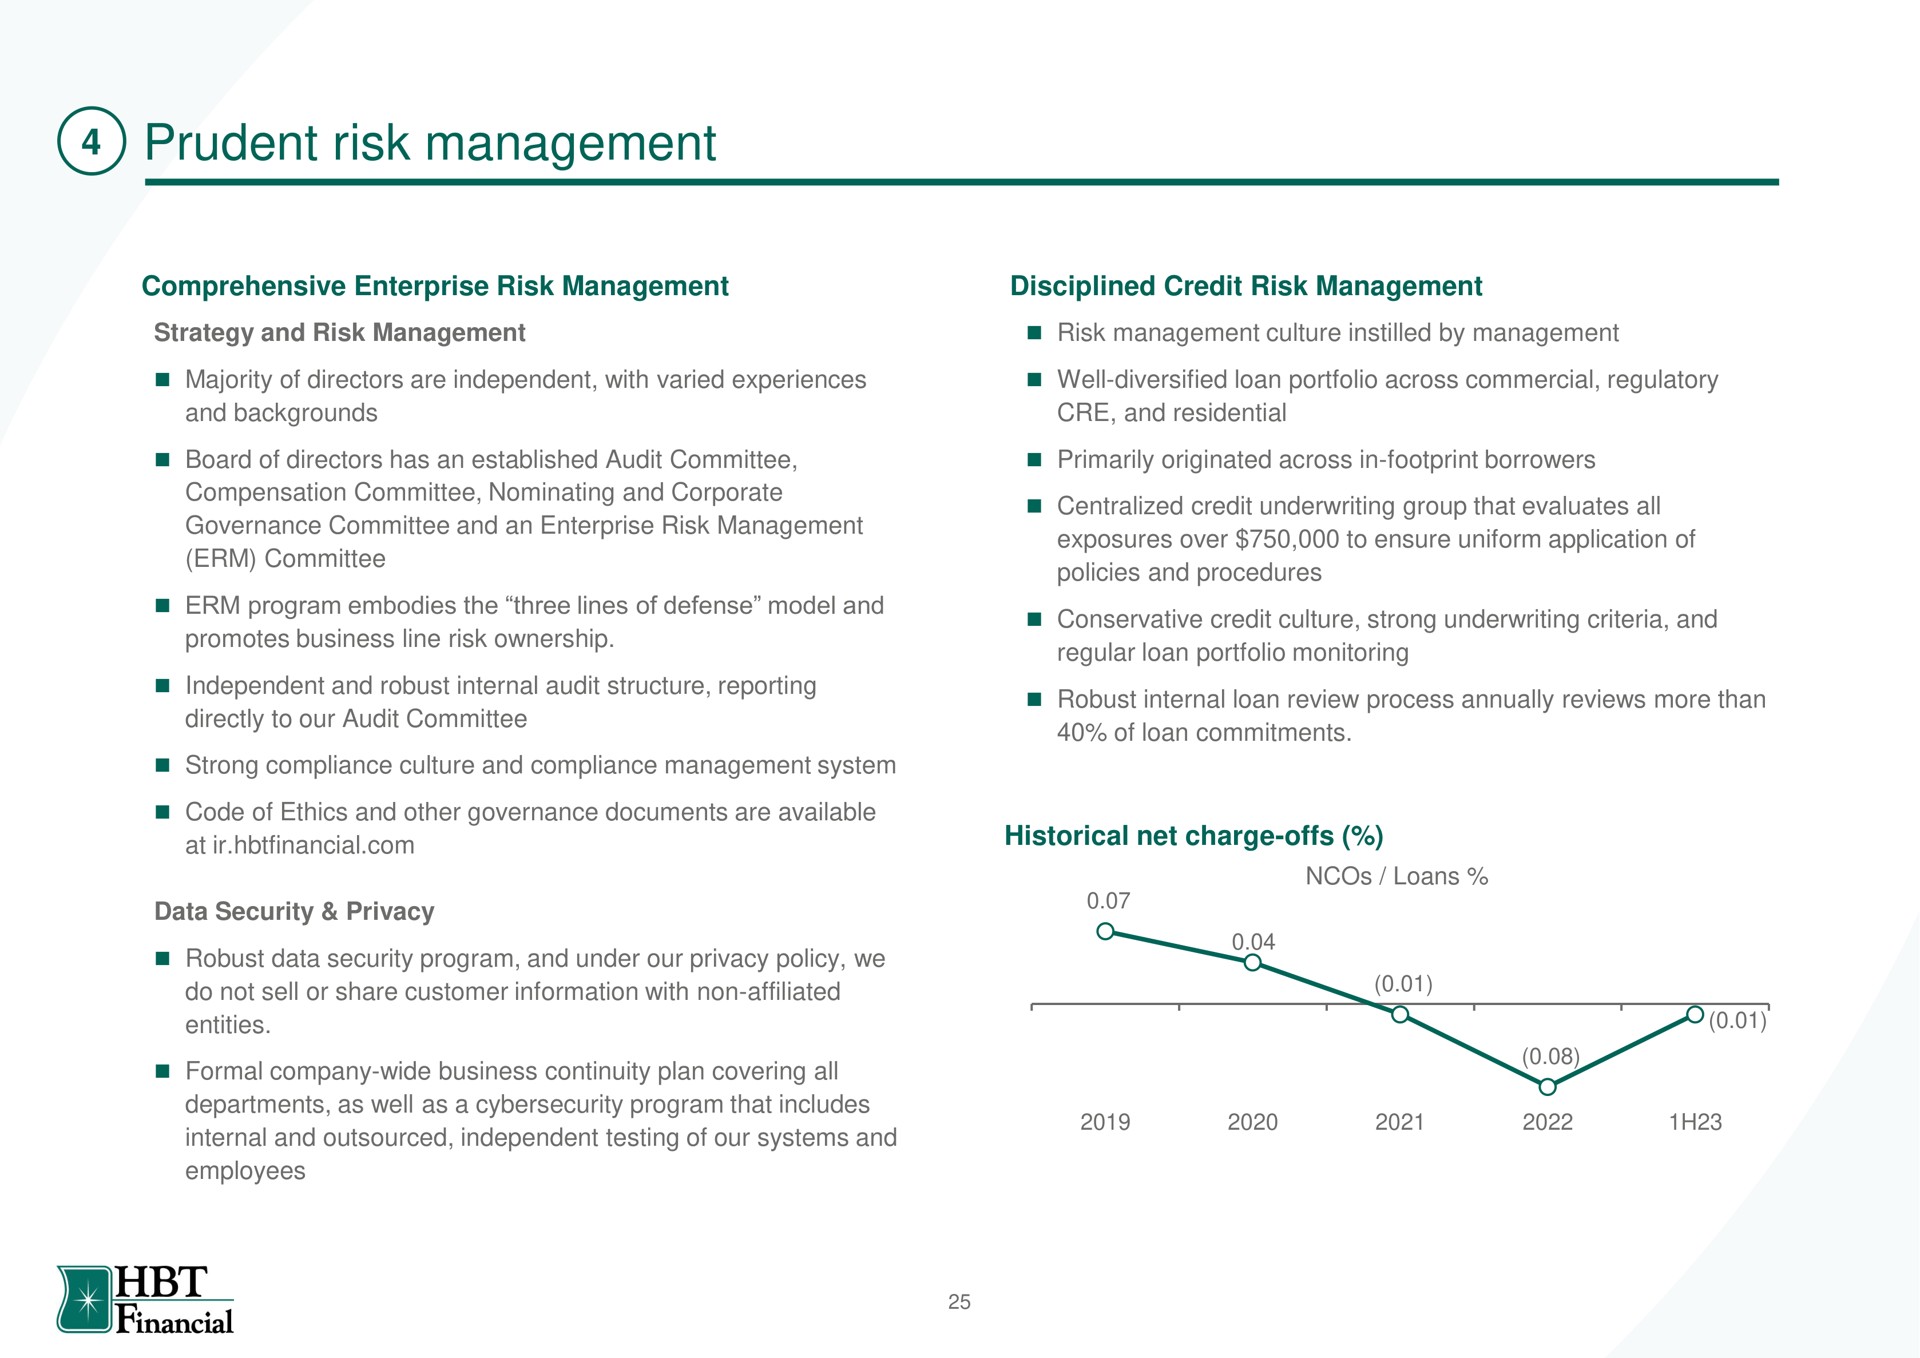 prudent risk management banc | HBT Financial